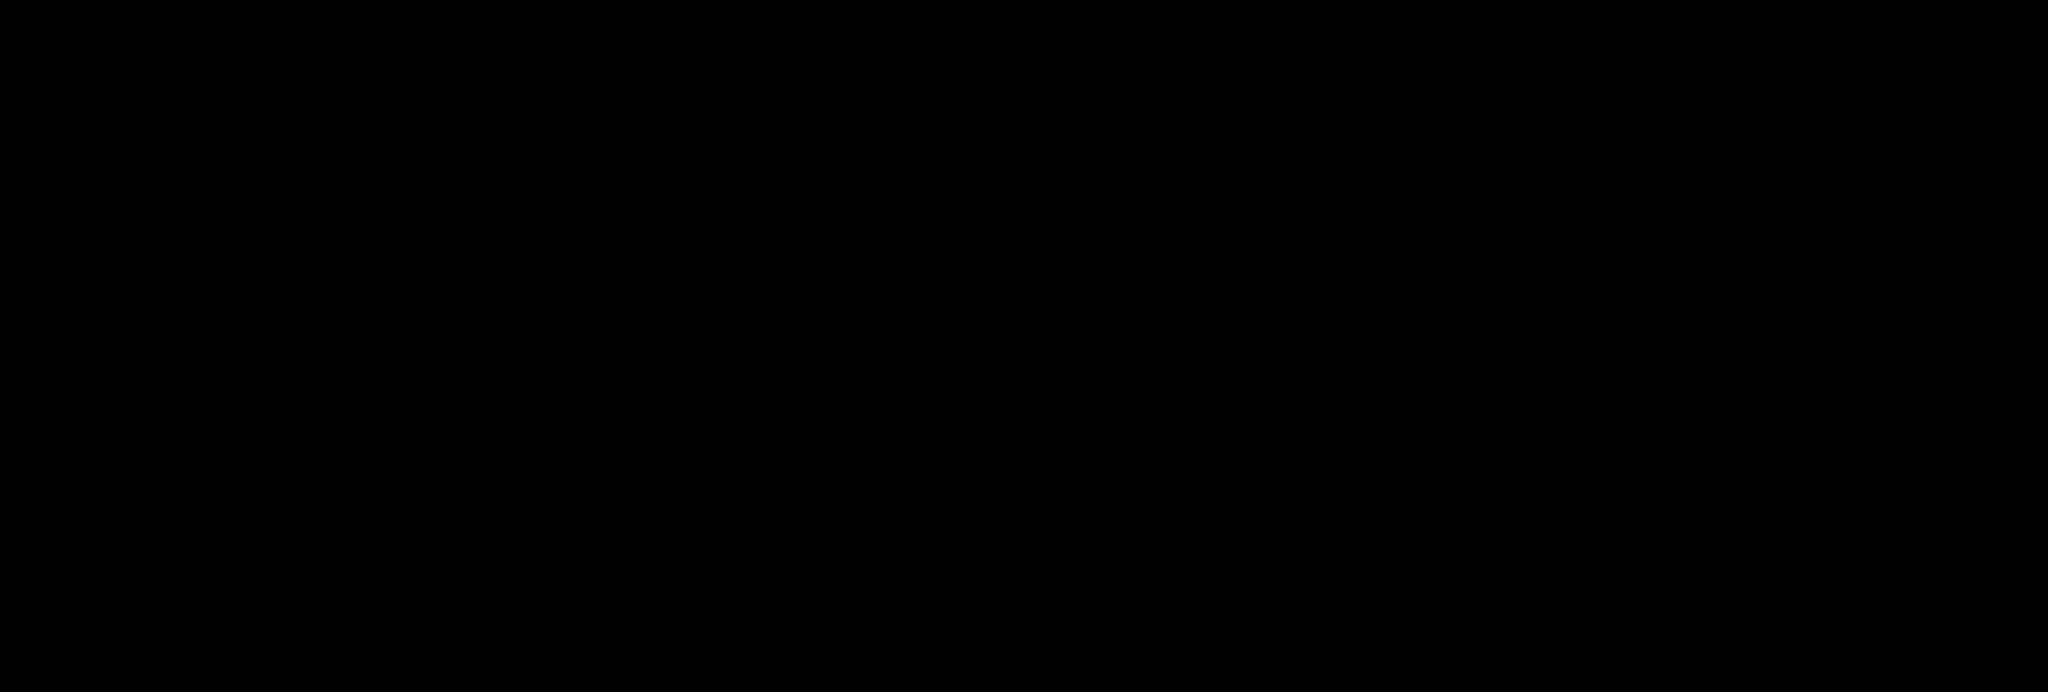 Barbepil Logo Negro (002).png